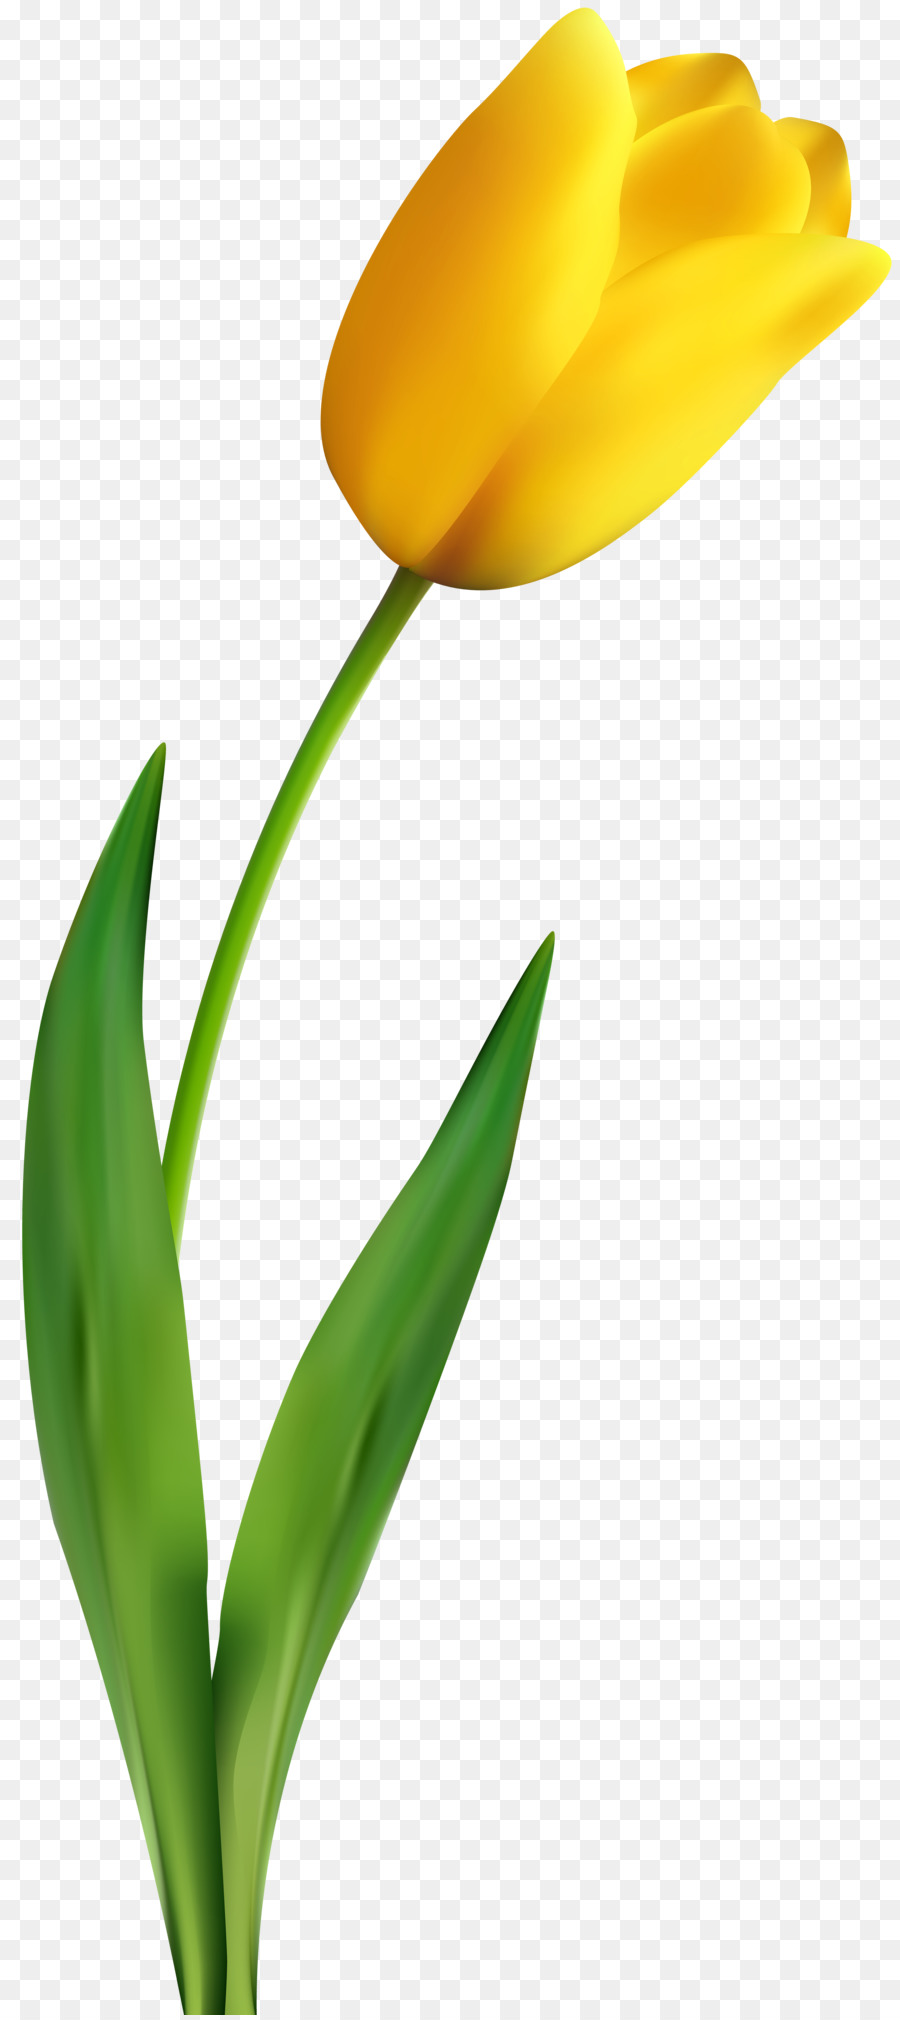 Tulip Flower Yellow Clip art - tulip material png download - 3574*8000 - Free Transparent Tulip png Download.